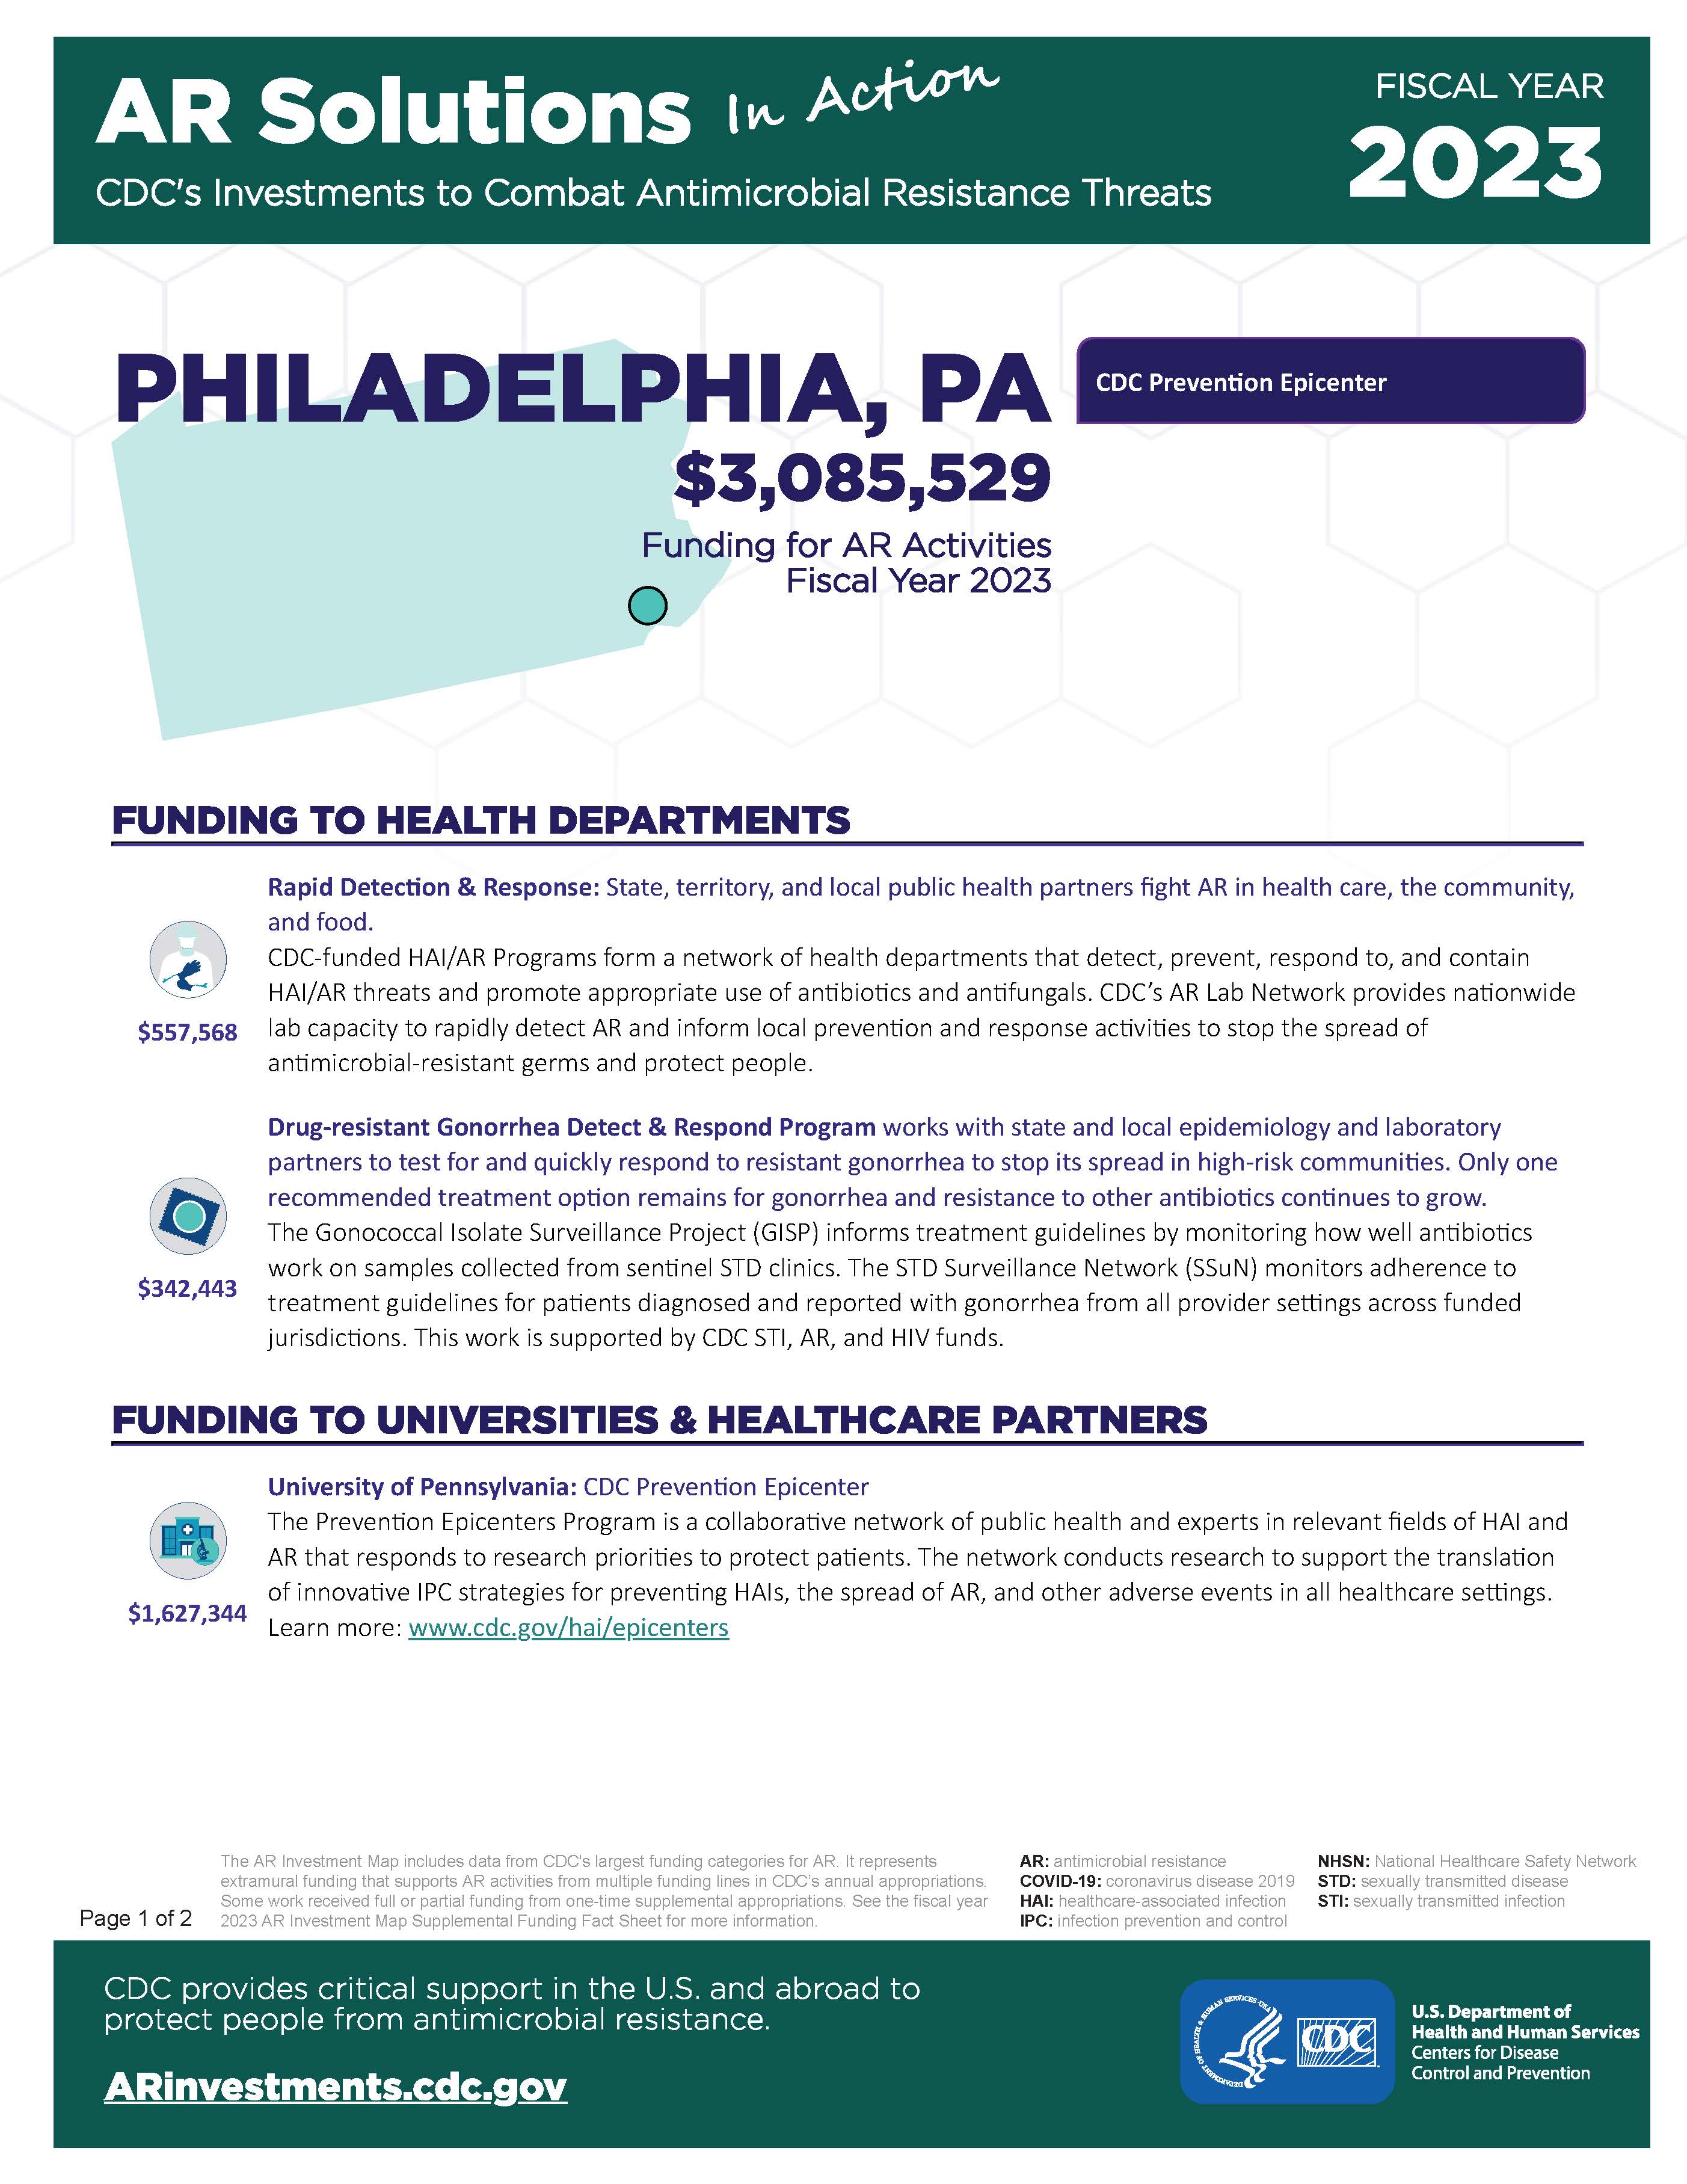 View Factsheet for Philadelphia, PA